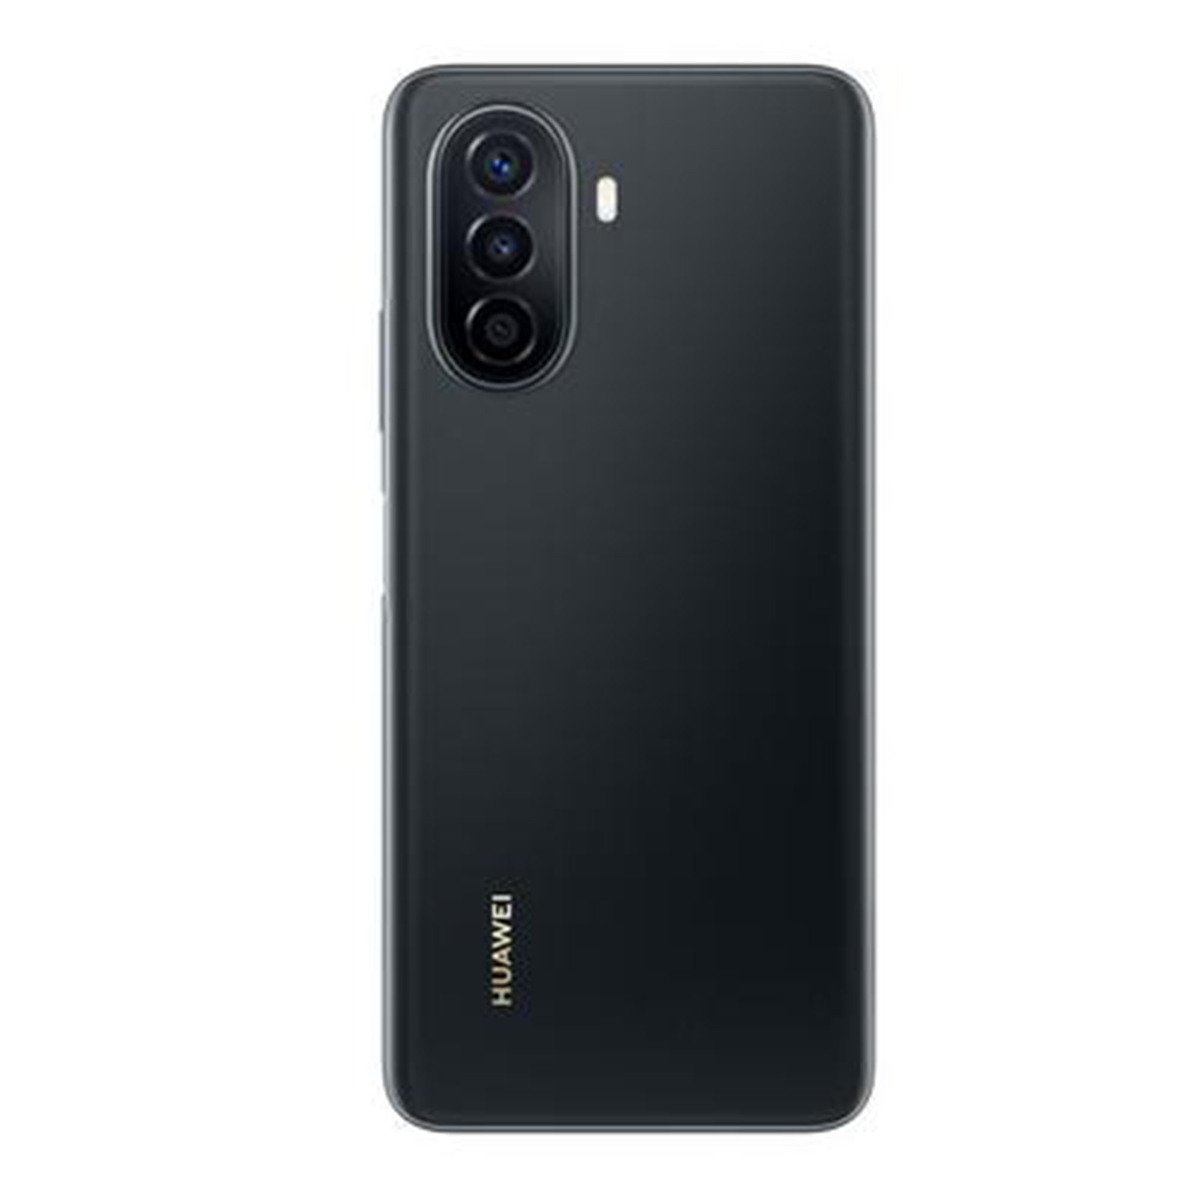 Huawei Nova Y71 Dual SIM 4G Smartphone, 8 GB RAM, 128 GB Storage, Black